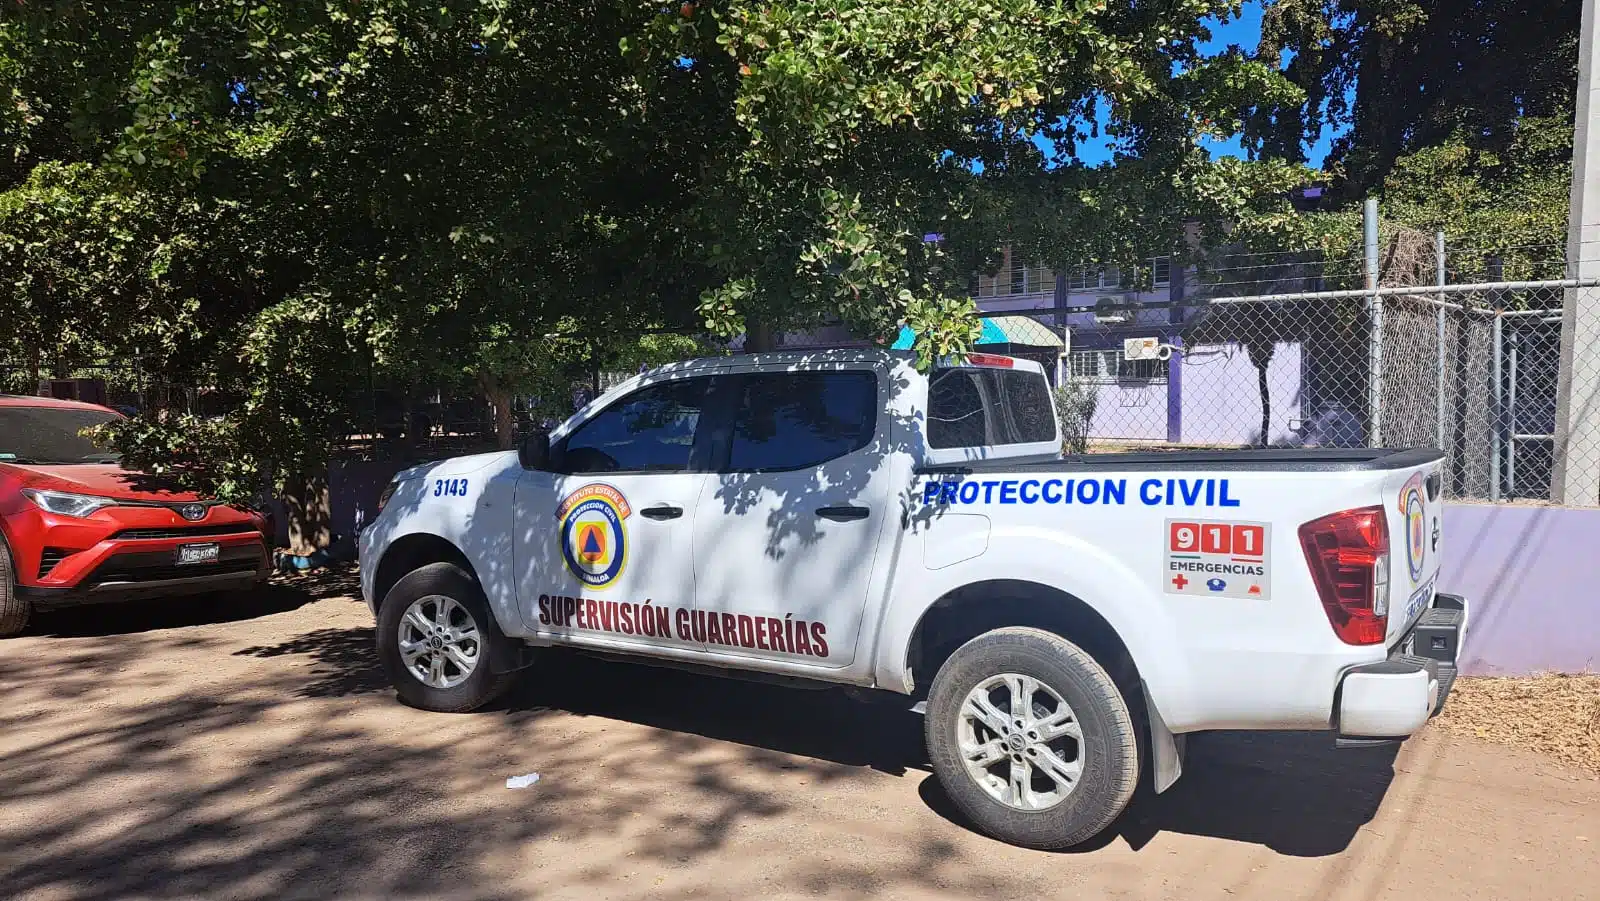 Vehículo de Protección Civil, Supervisión Guarderías